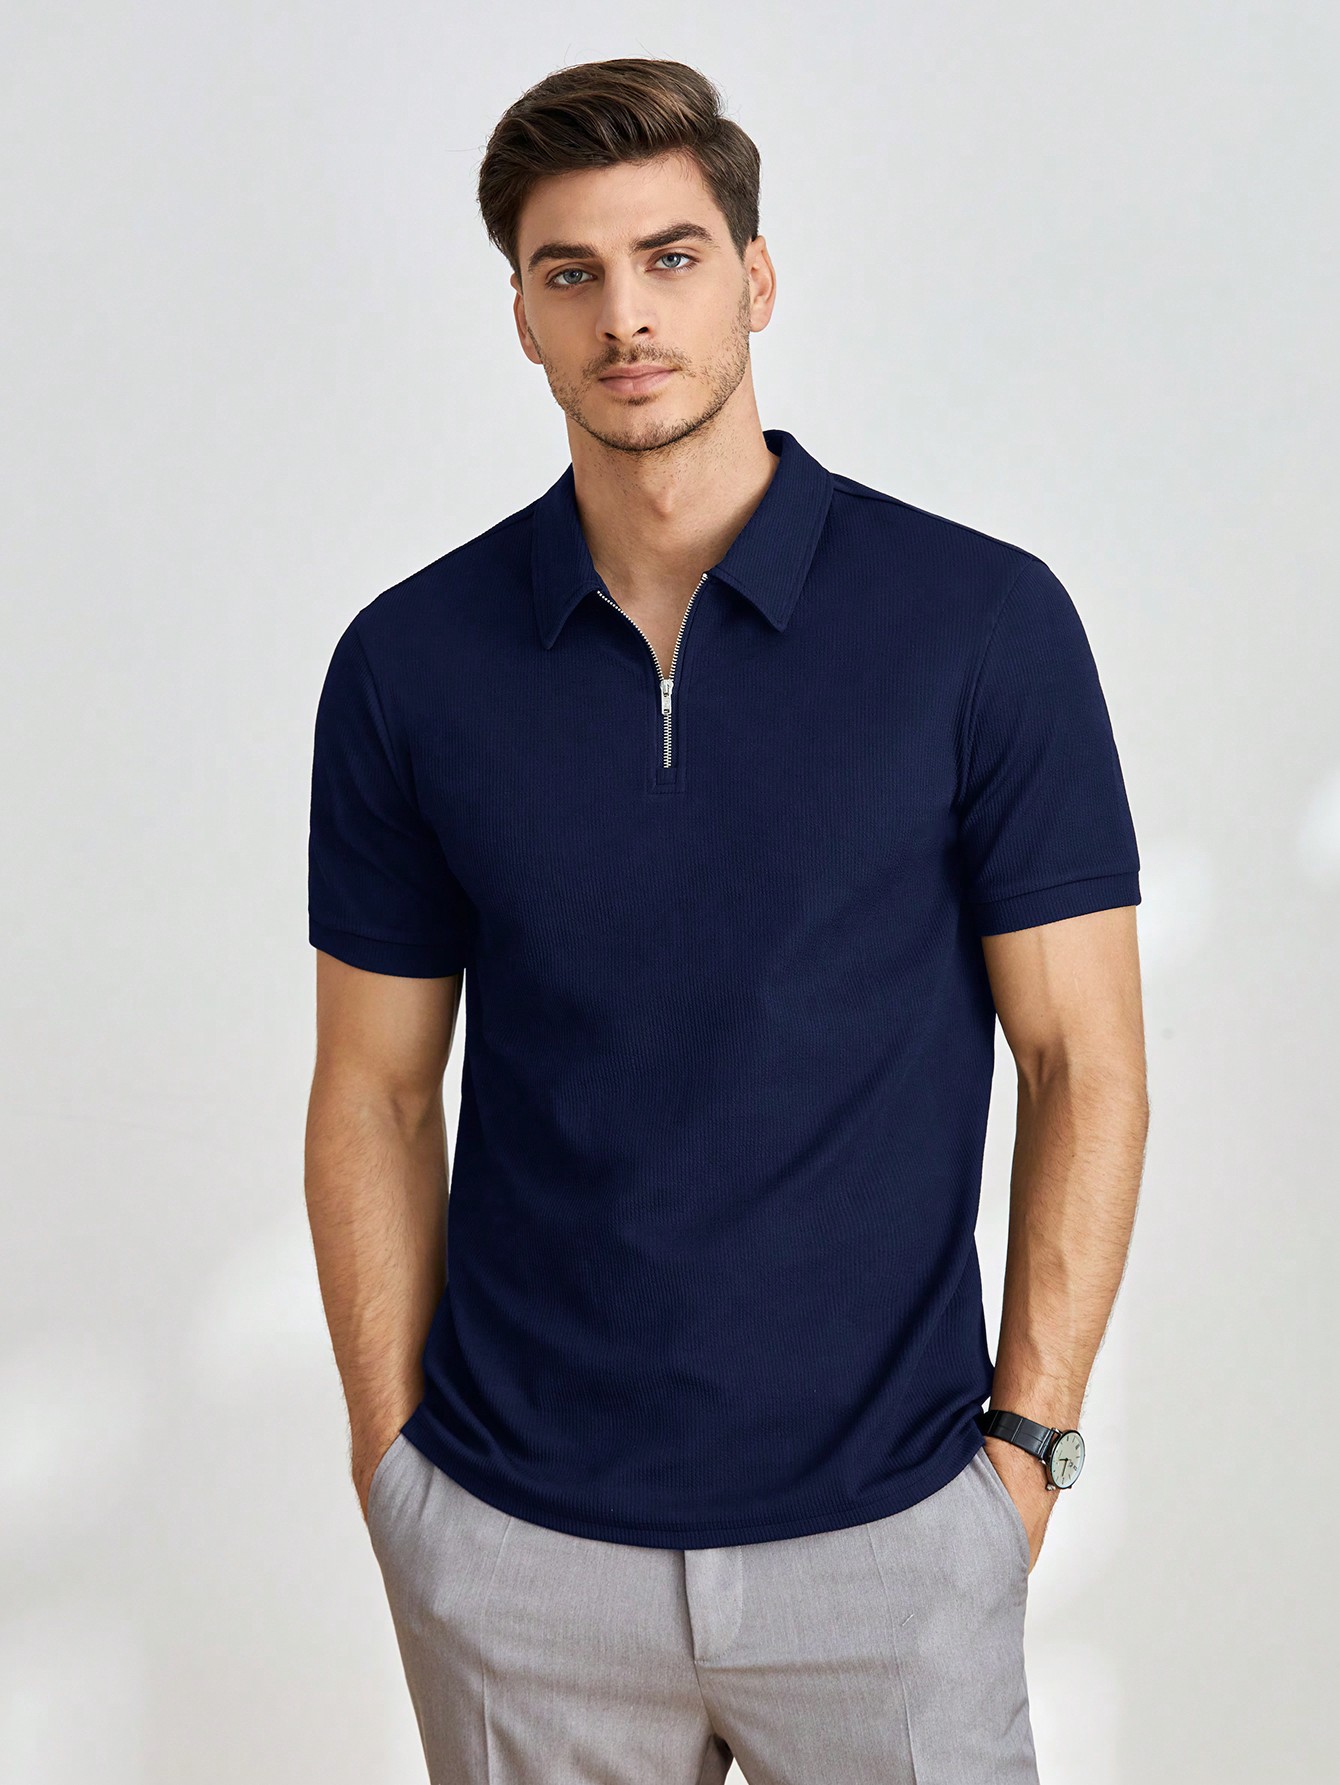 Мужская однотонная рубашка-поло с короткими рукавами Manfinity Homme, темно-синий